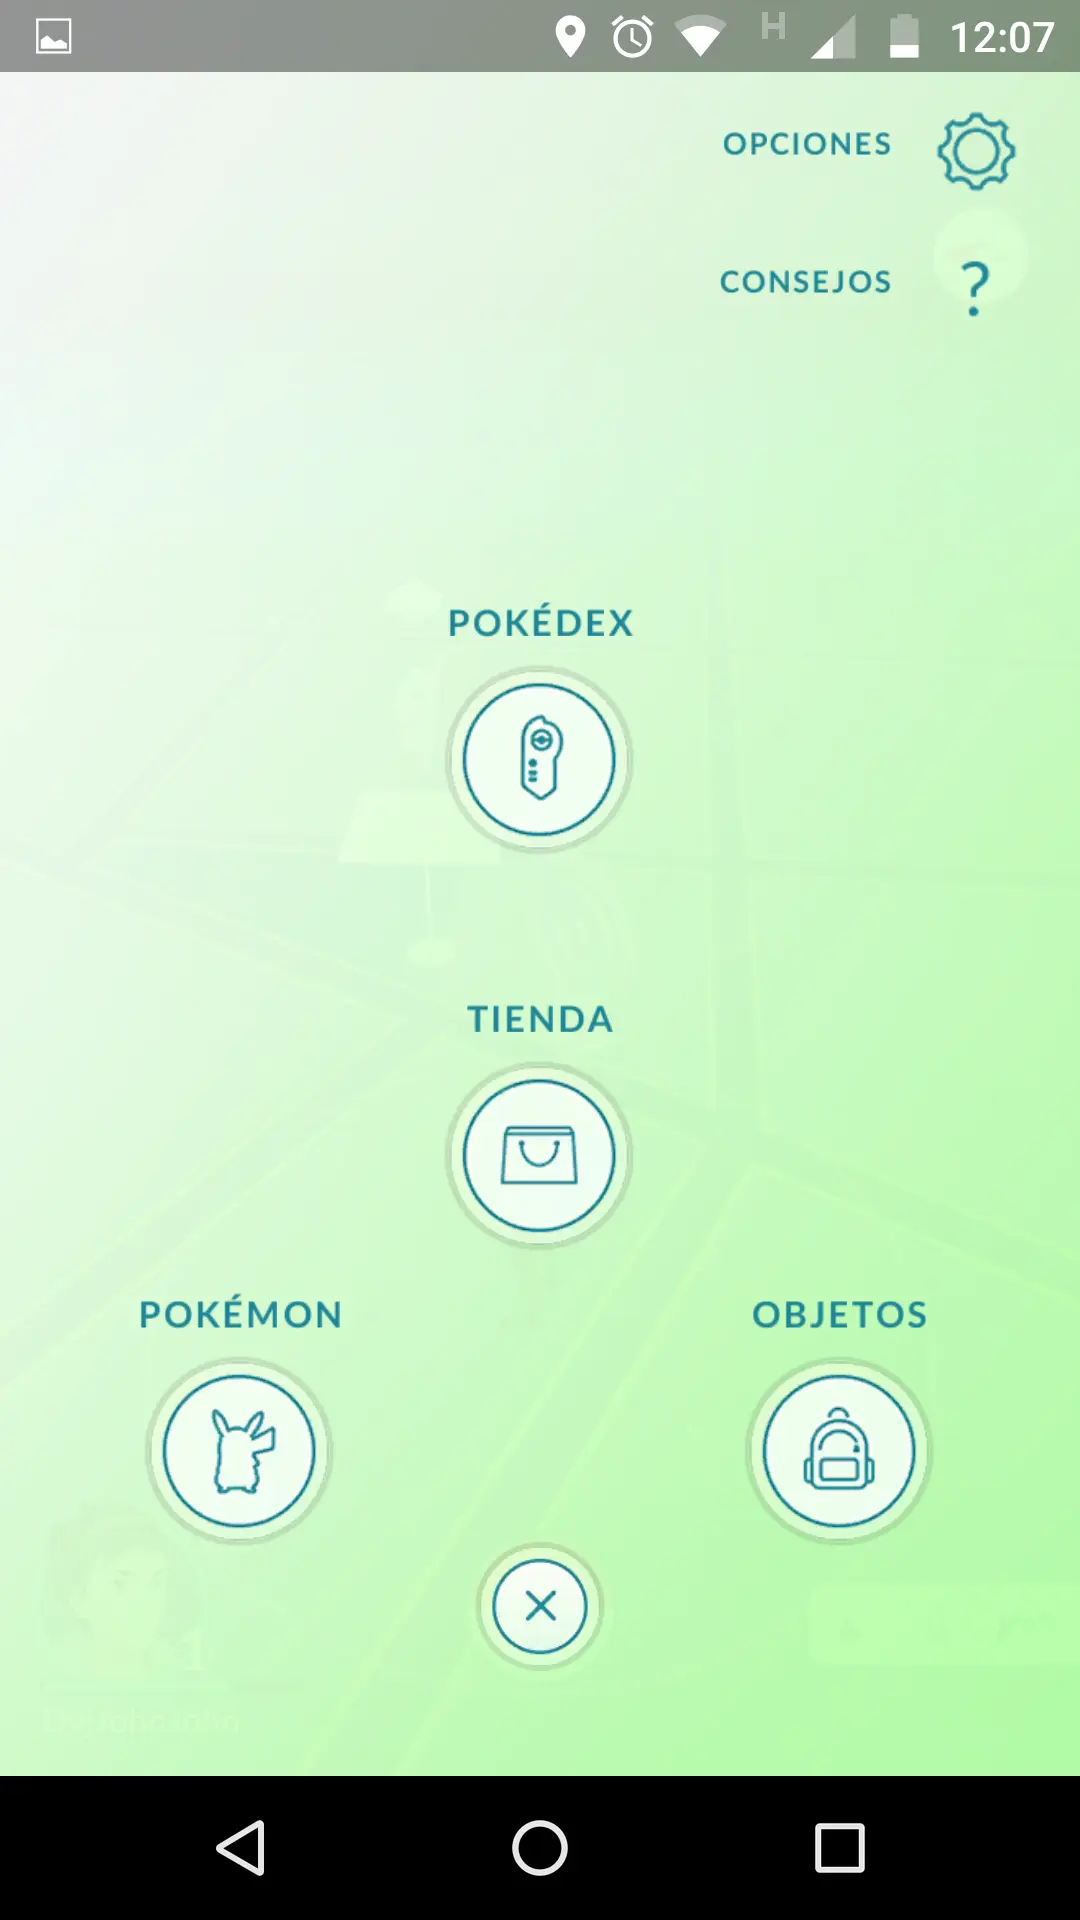 Descarga Pokemon Go disponible Android Mexico Latam (8)